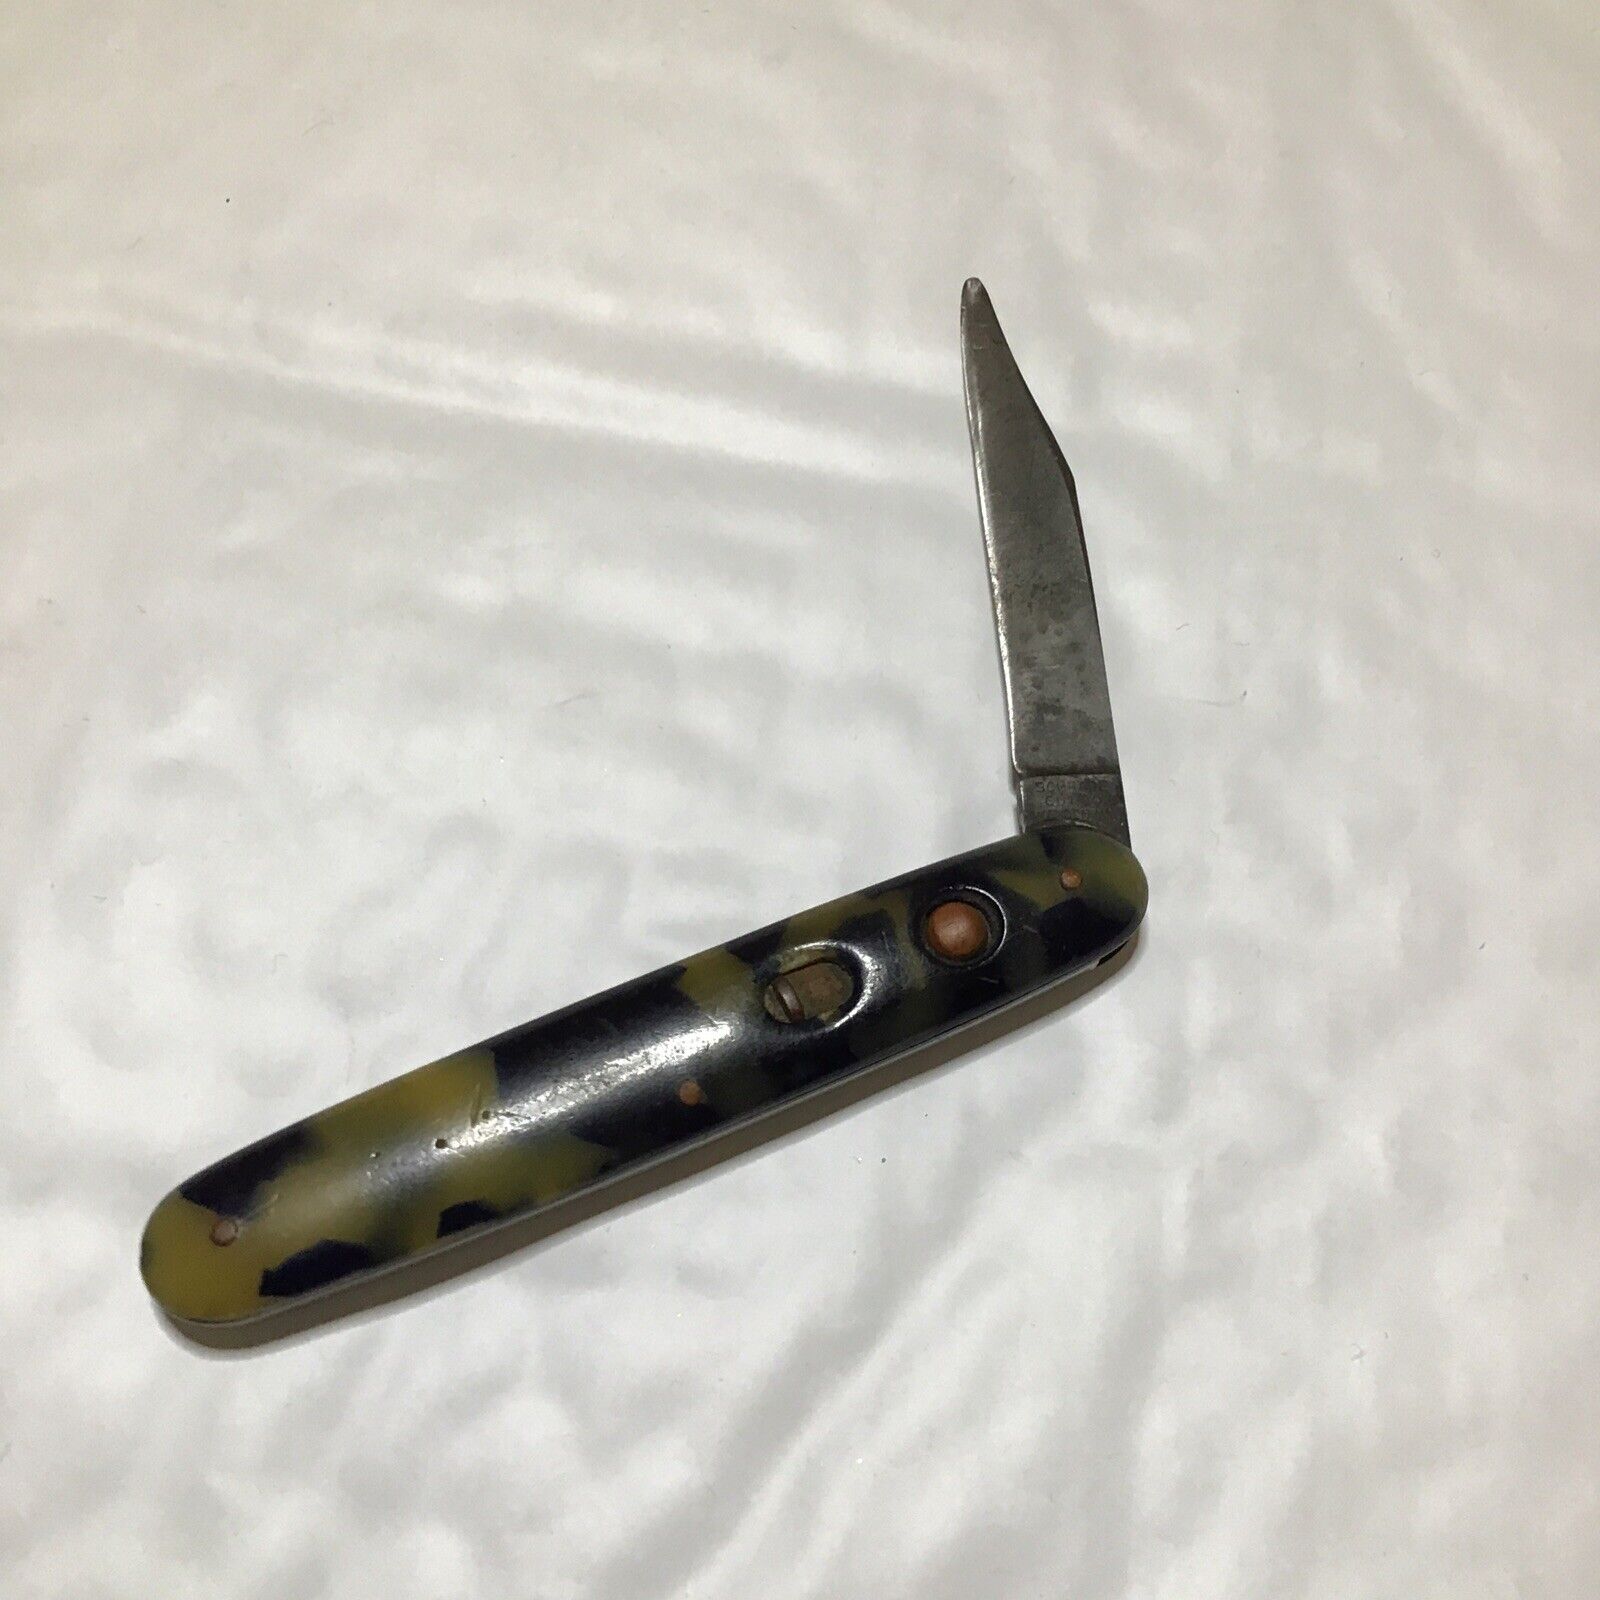 SCHRADE CUT. Co. WALDEN N.Y. 1 BLADE POCKET KNIFE Multi Colored. USED